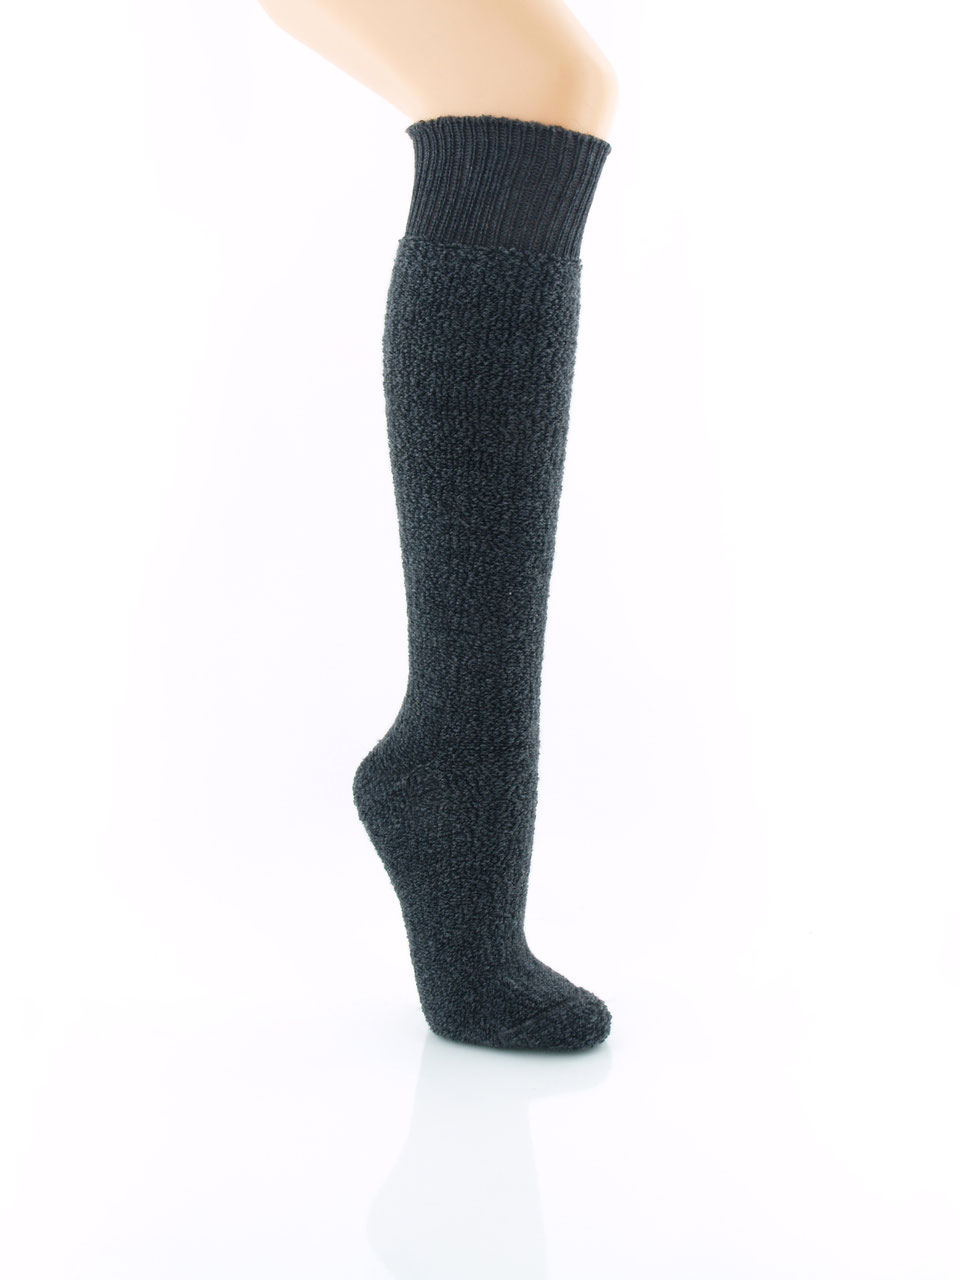 DAM Thermo Socks Thermosocken Cool Max Funktions Socken Warm & Atmungsaktiv 